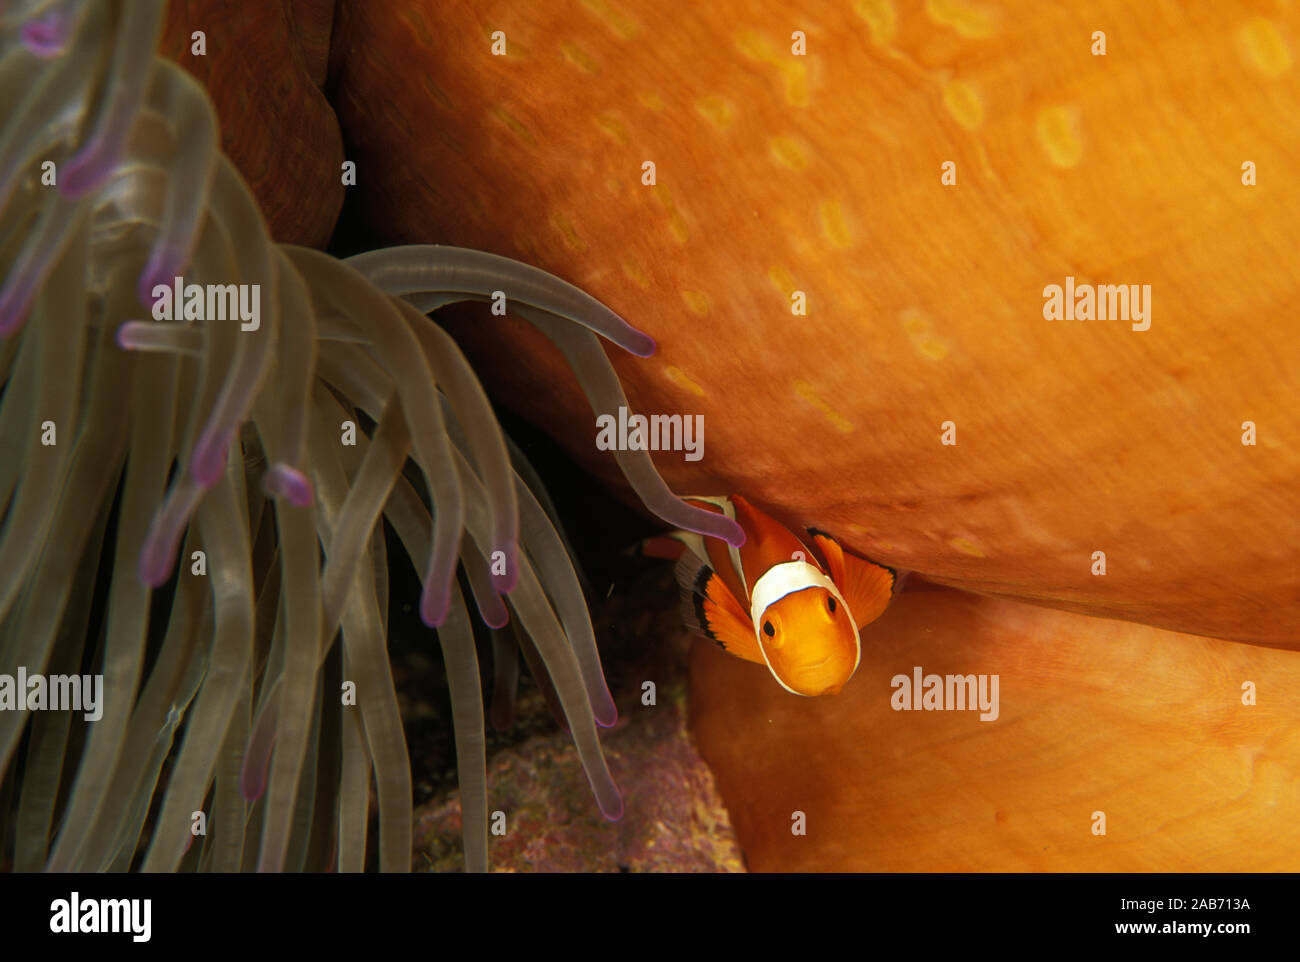 Clown anemonefish (Amphiprion ocellaris), in host anemone (Heteractis magnifica). Manado, Indonesia Stock Photo